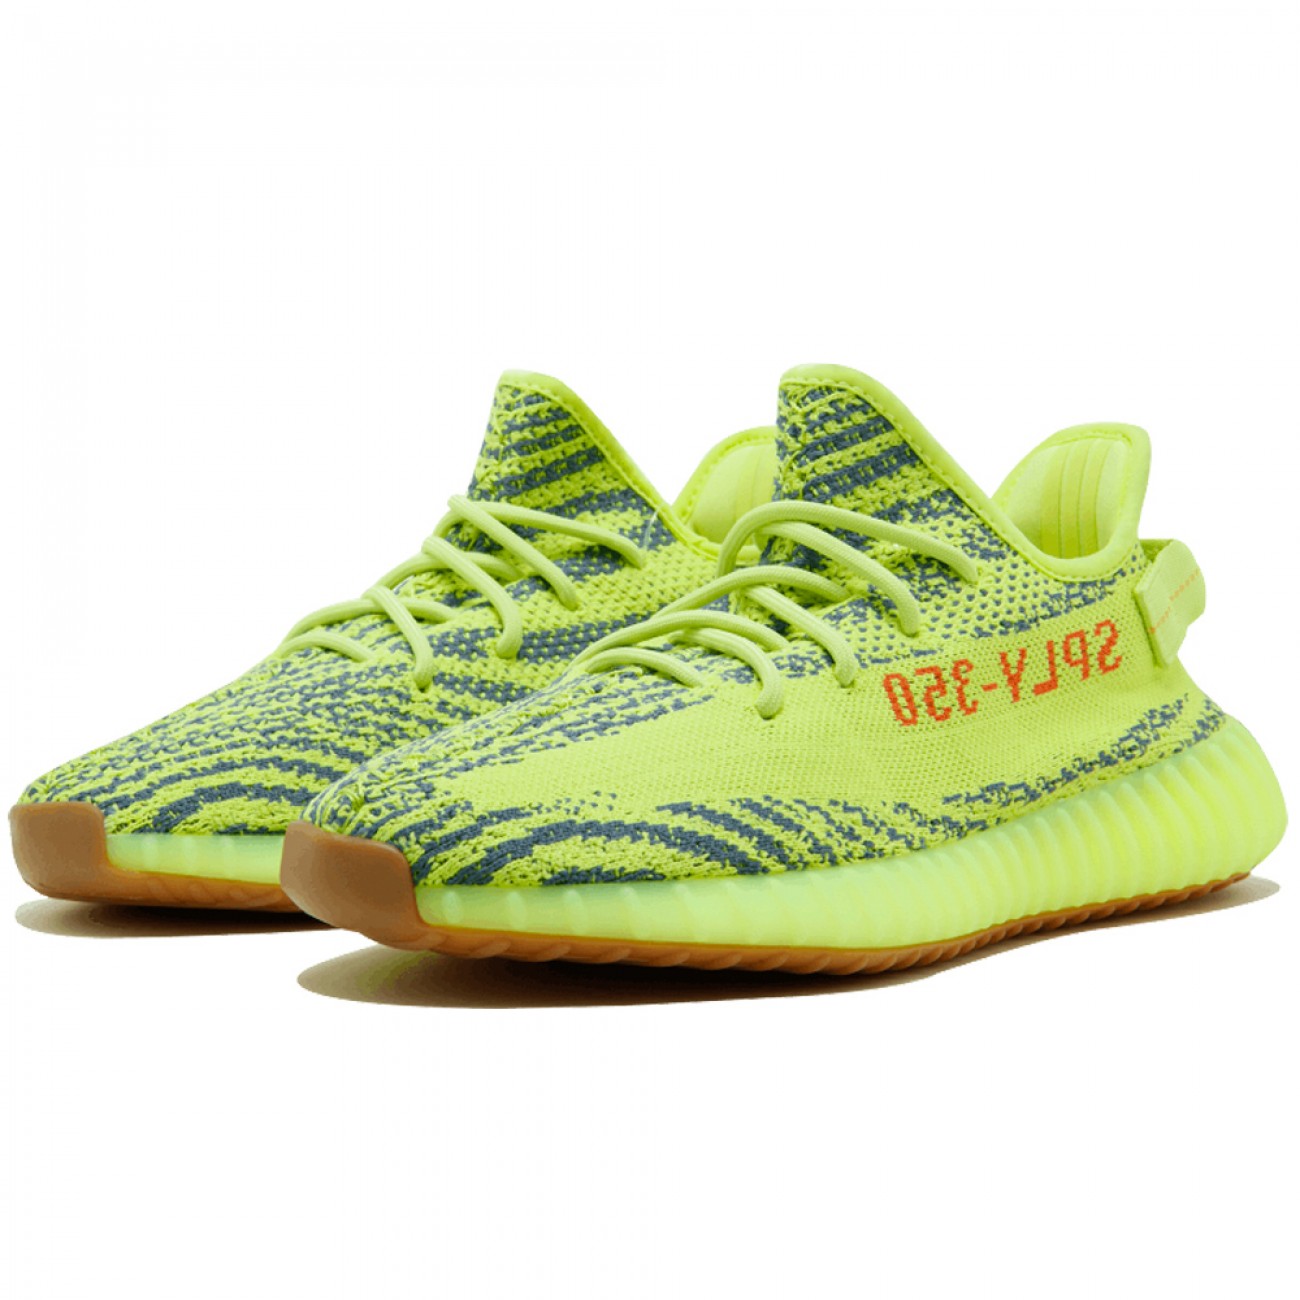 Adidas Originals Yeezy Boost 350 V2 "Semi Frozen Yellow" Yebra B37572